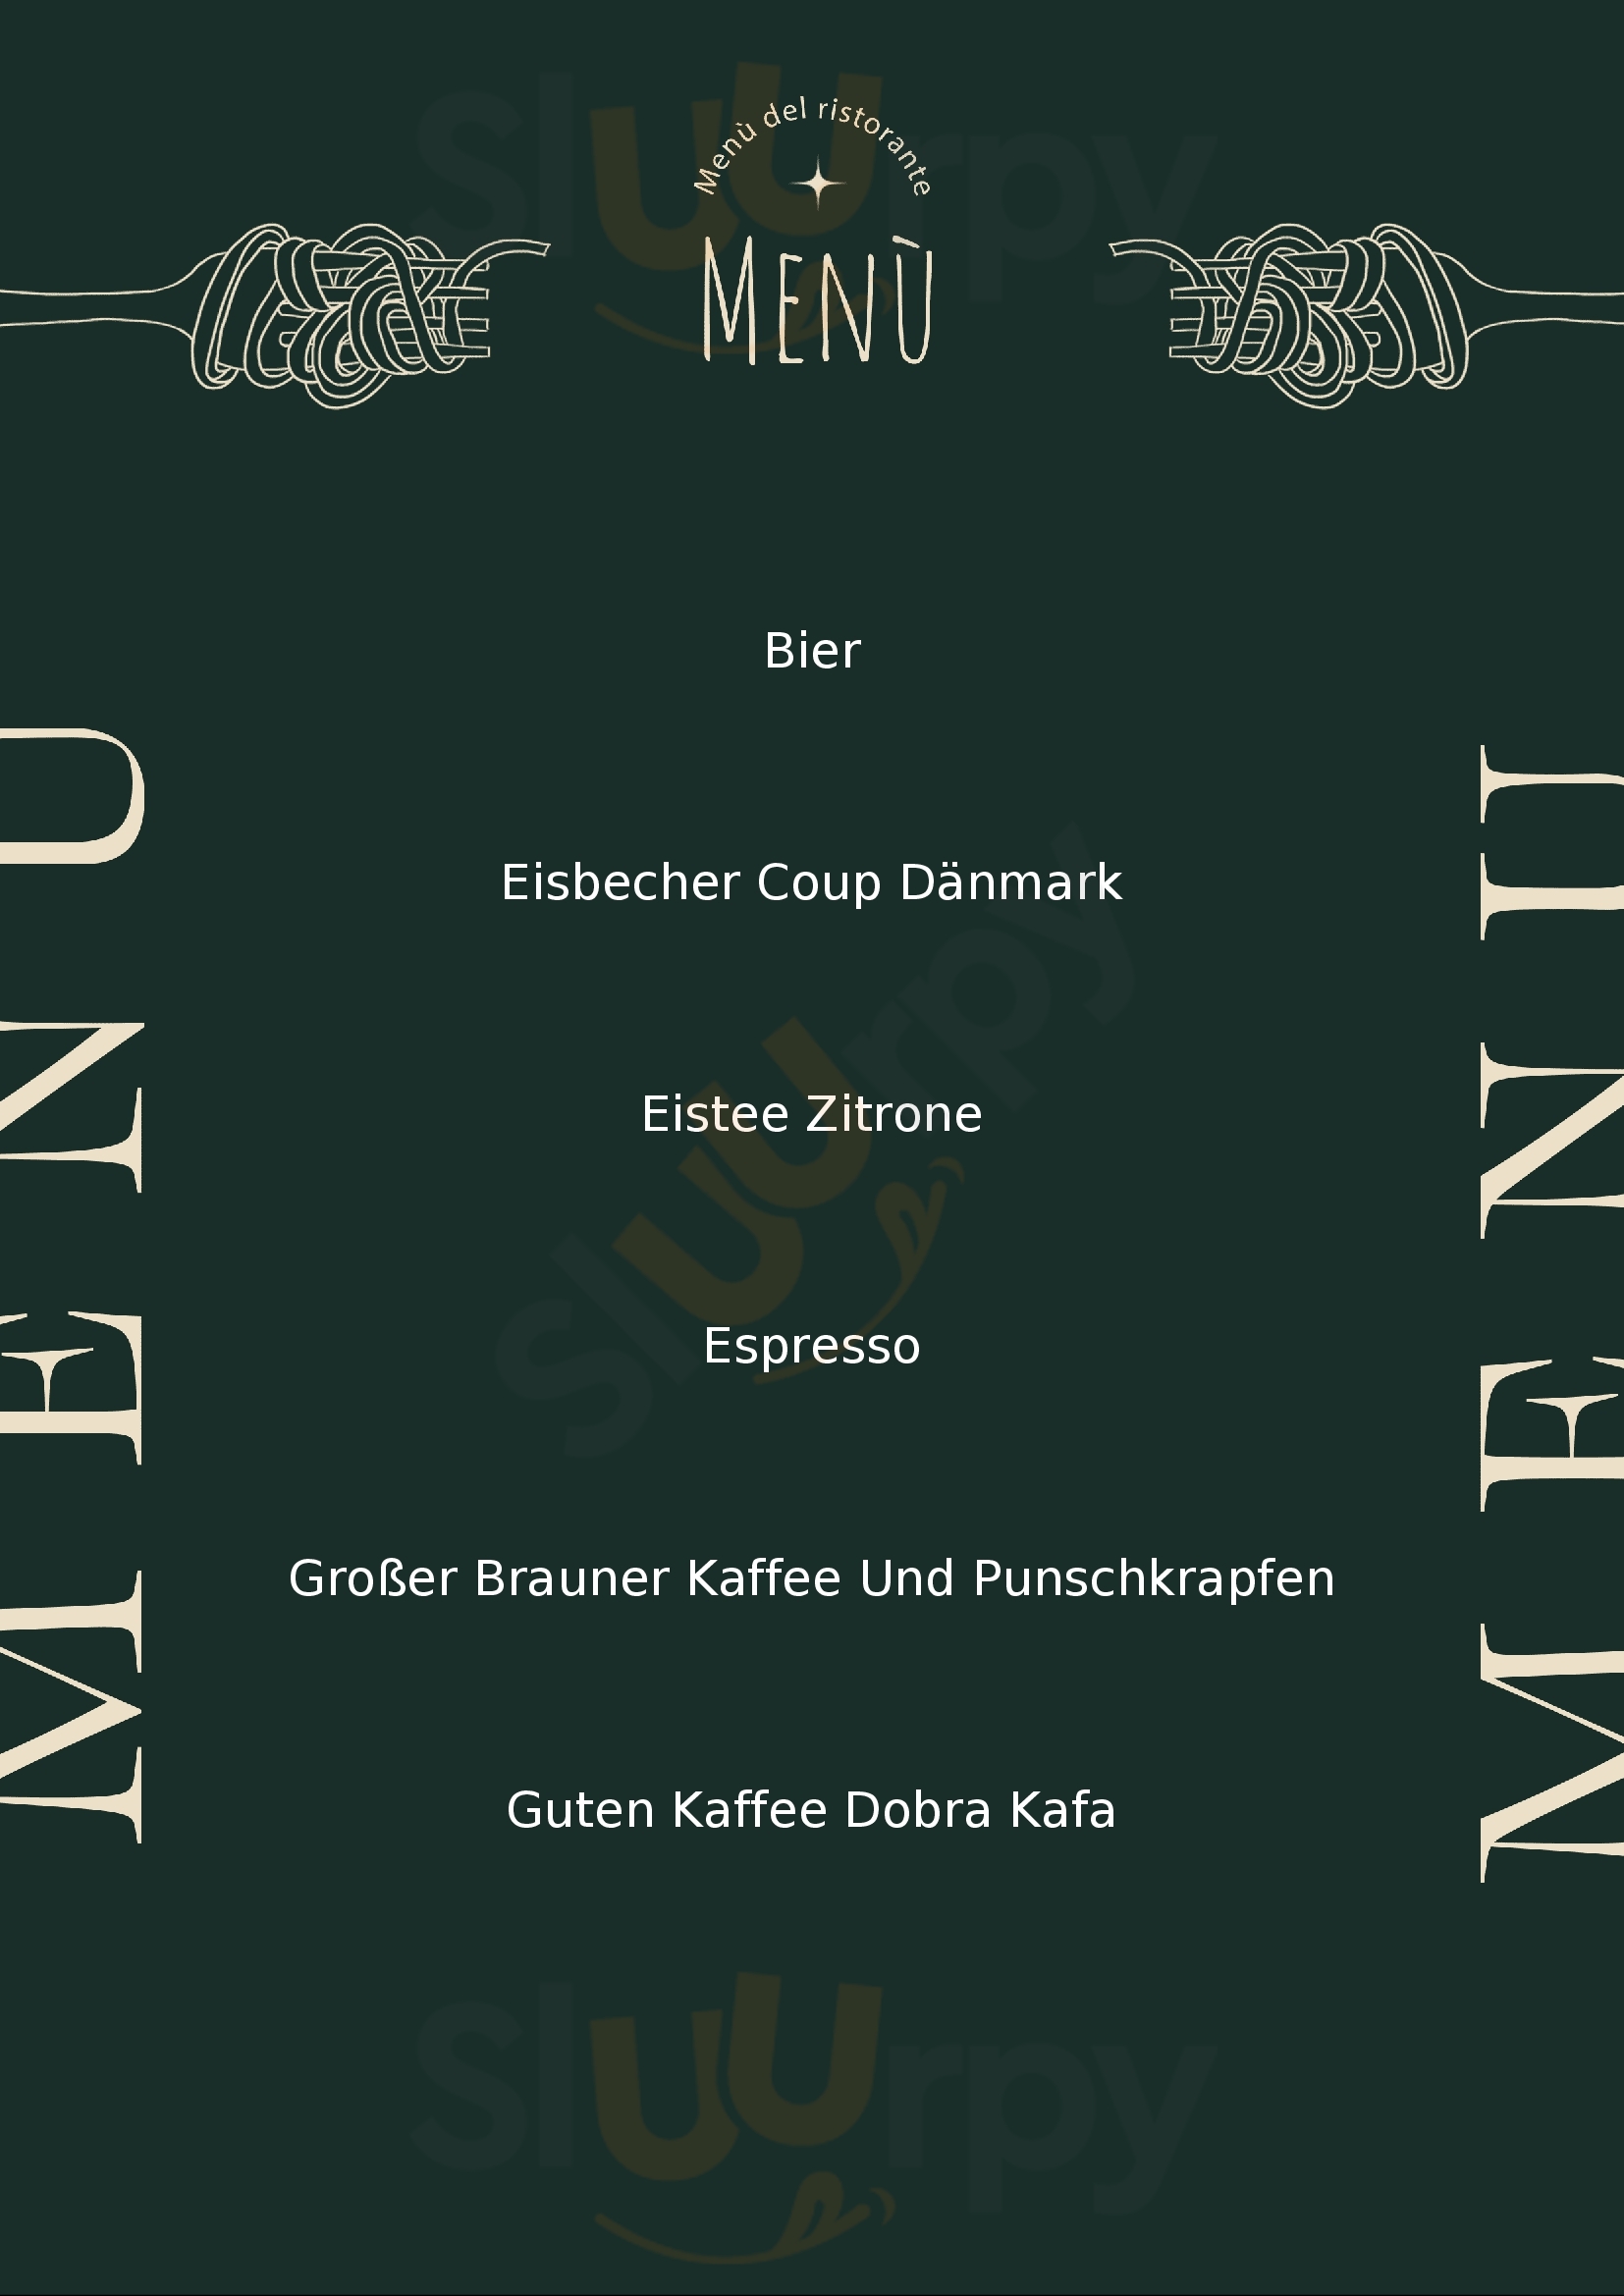 Cafe Konditorei Ferstl Wiener Neustadt Menu - 1